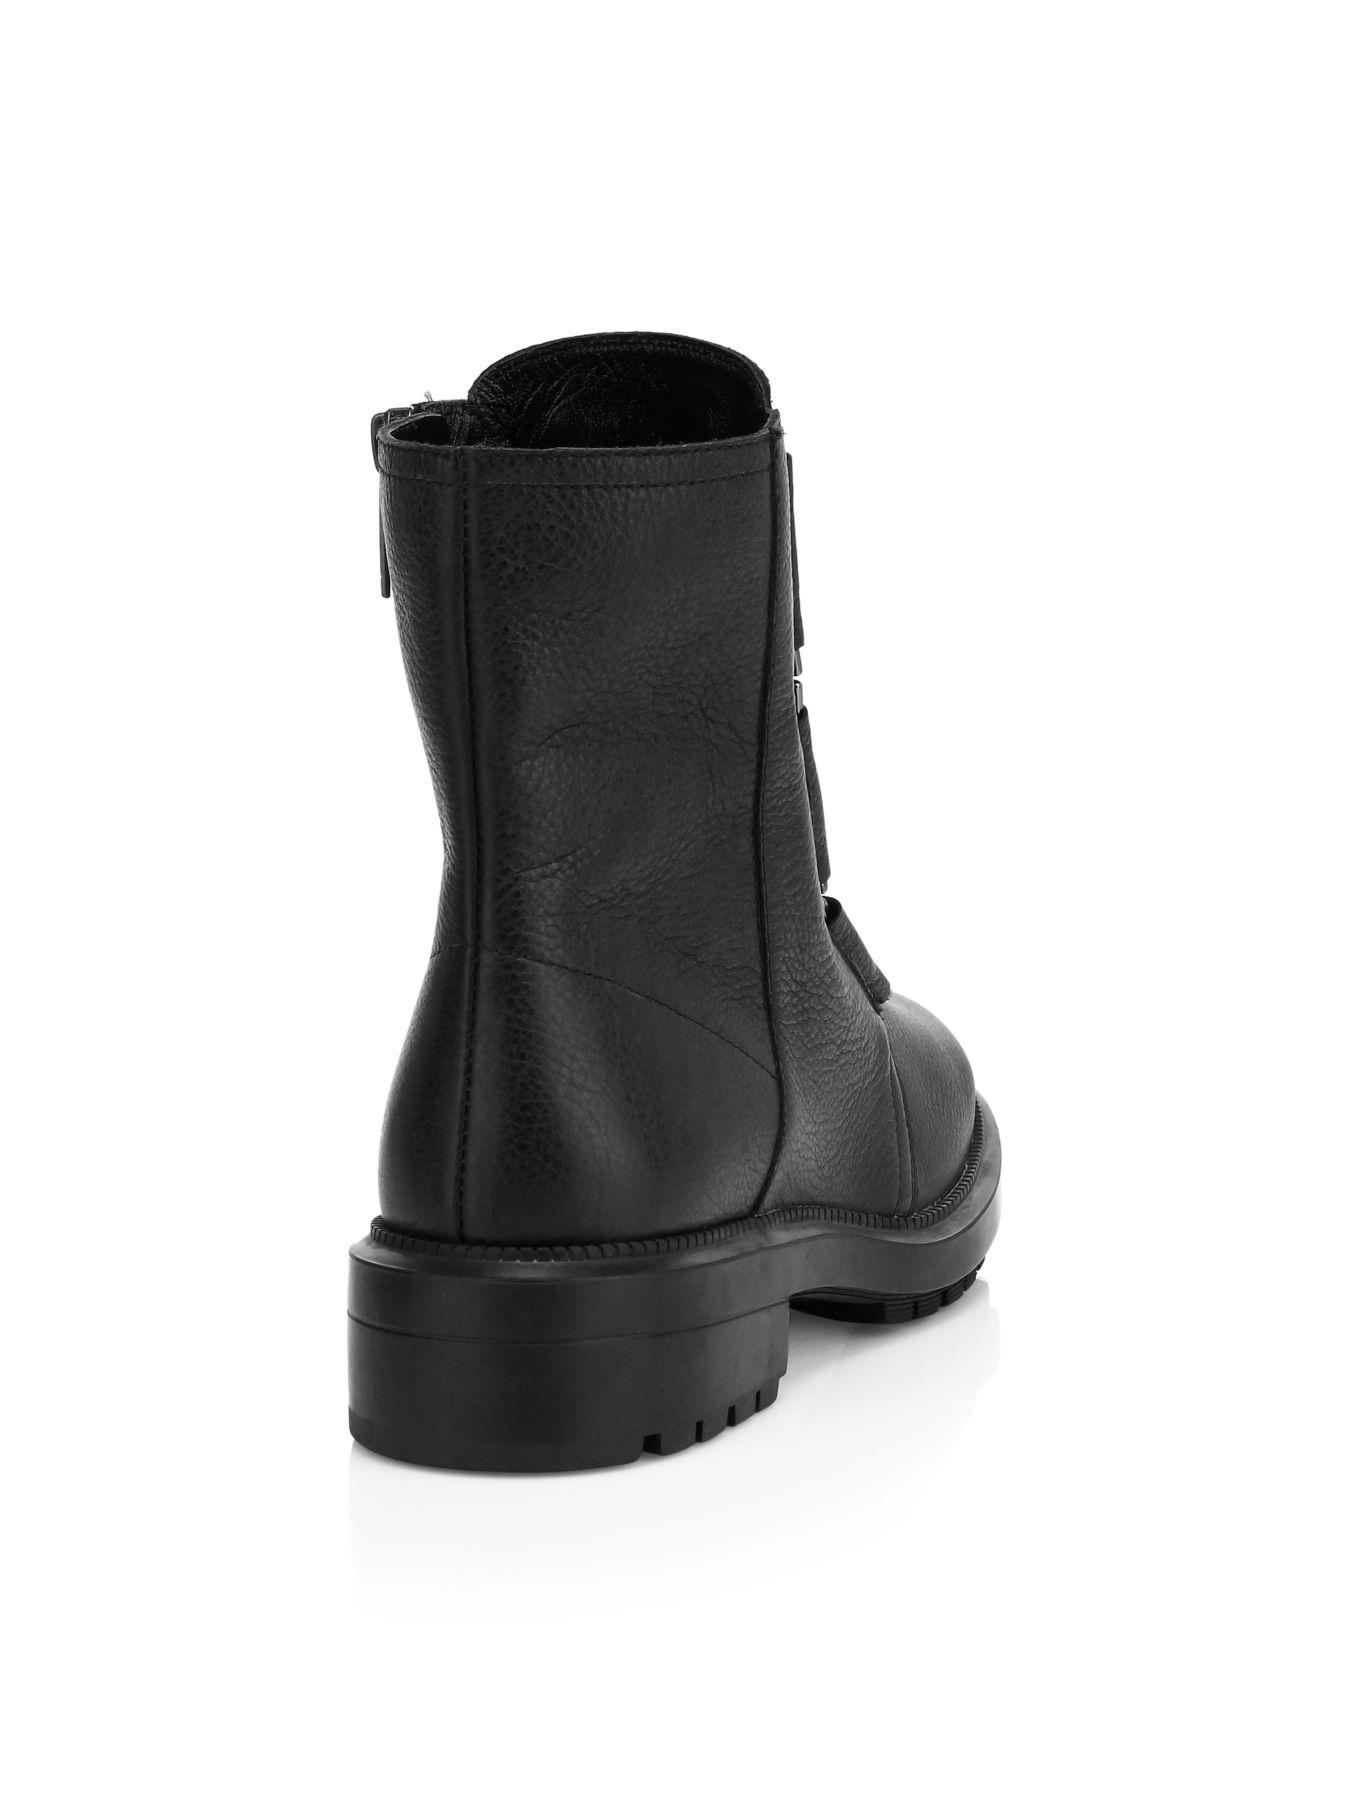 Aquatalia Liv Leather Combat Boots in Black - Lyst